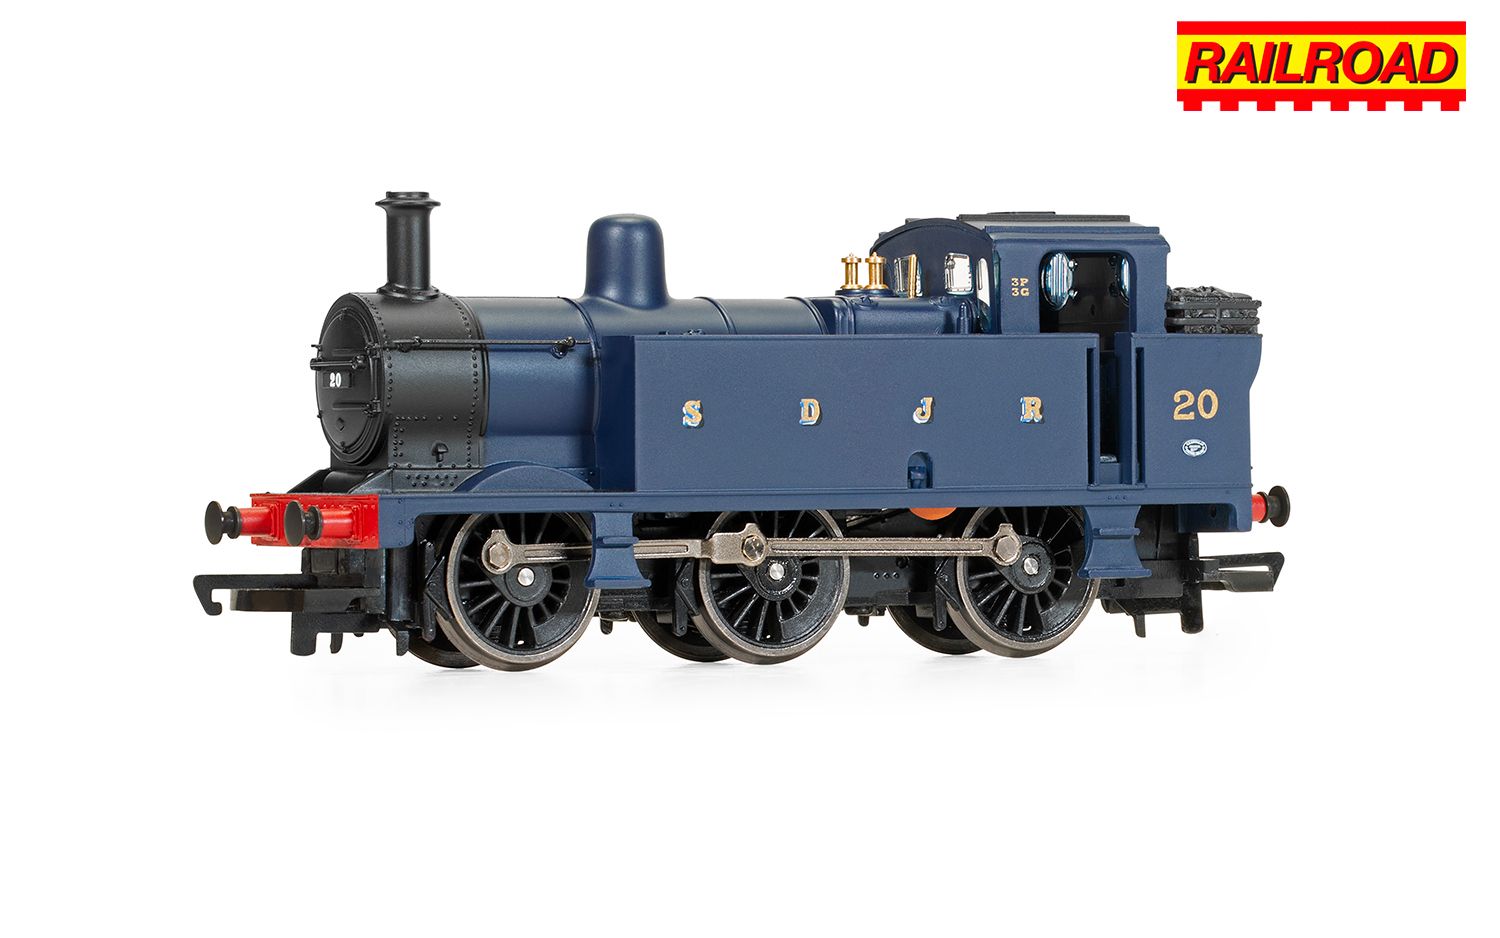 R30316 Hornby RailRoad S&DJR, Class 3F 'Jinty', 0-6-0, No. 20 - Era 2